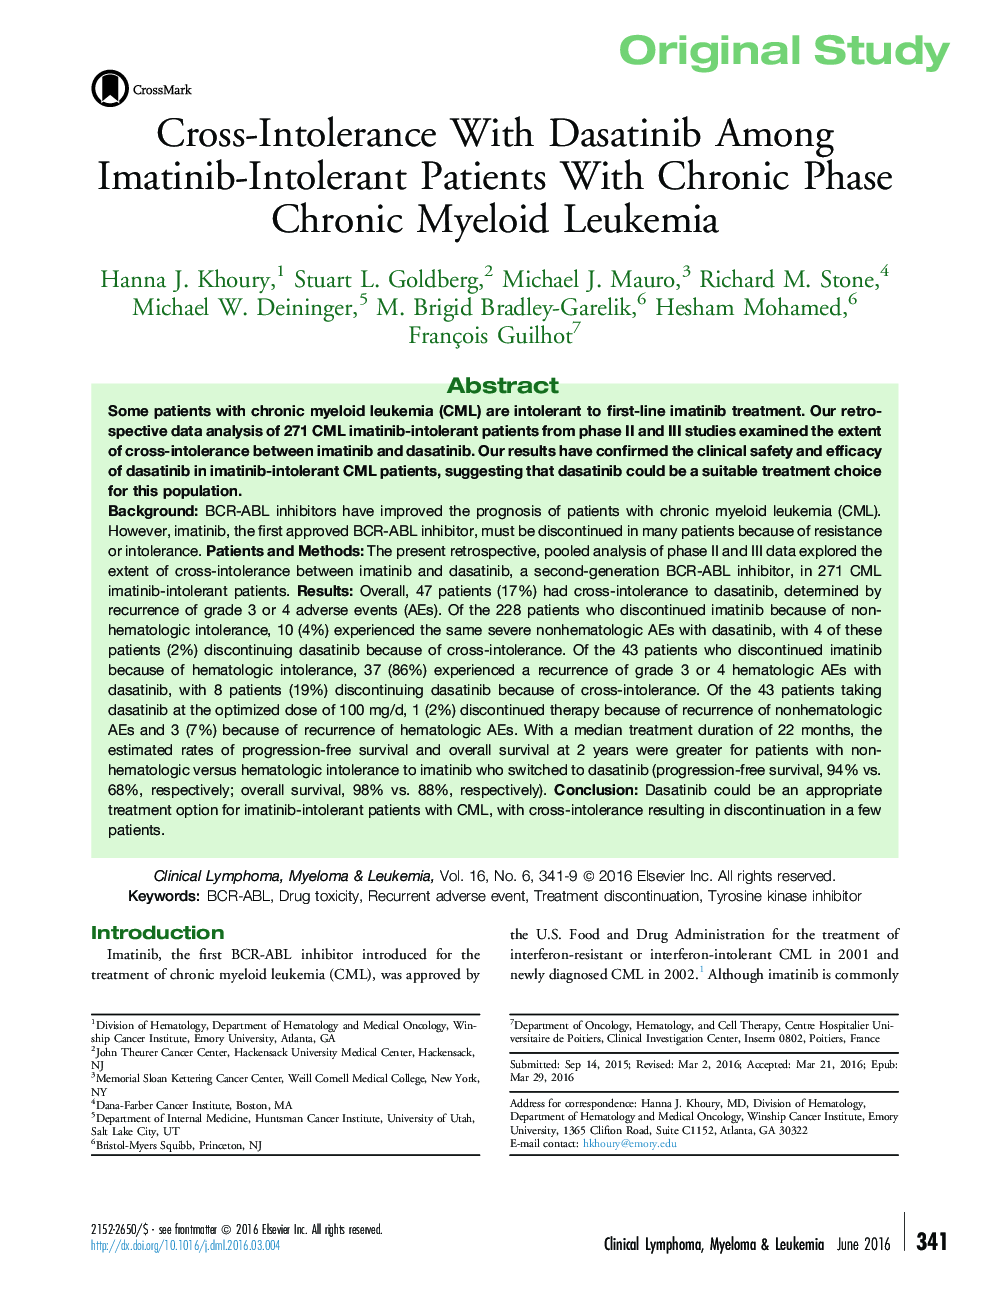 Cross-Intolerance With Dasatinib Among Imatinib-Intolerant Patients With Chronic Phase Chronic Myeloid Leukemia